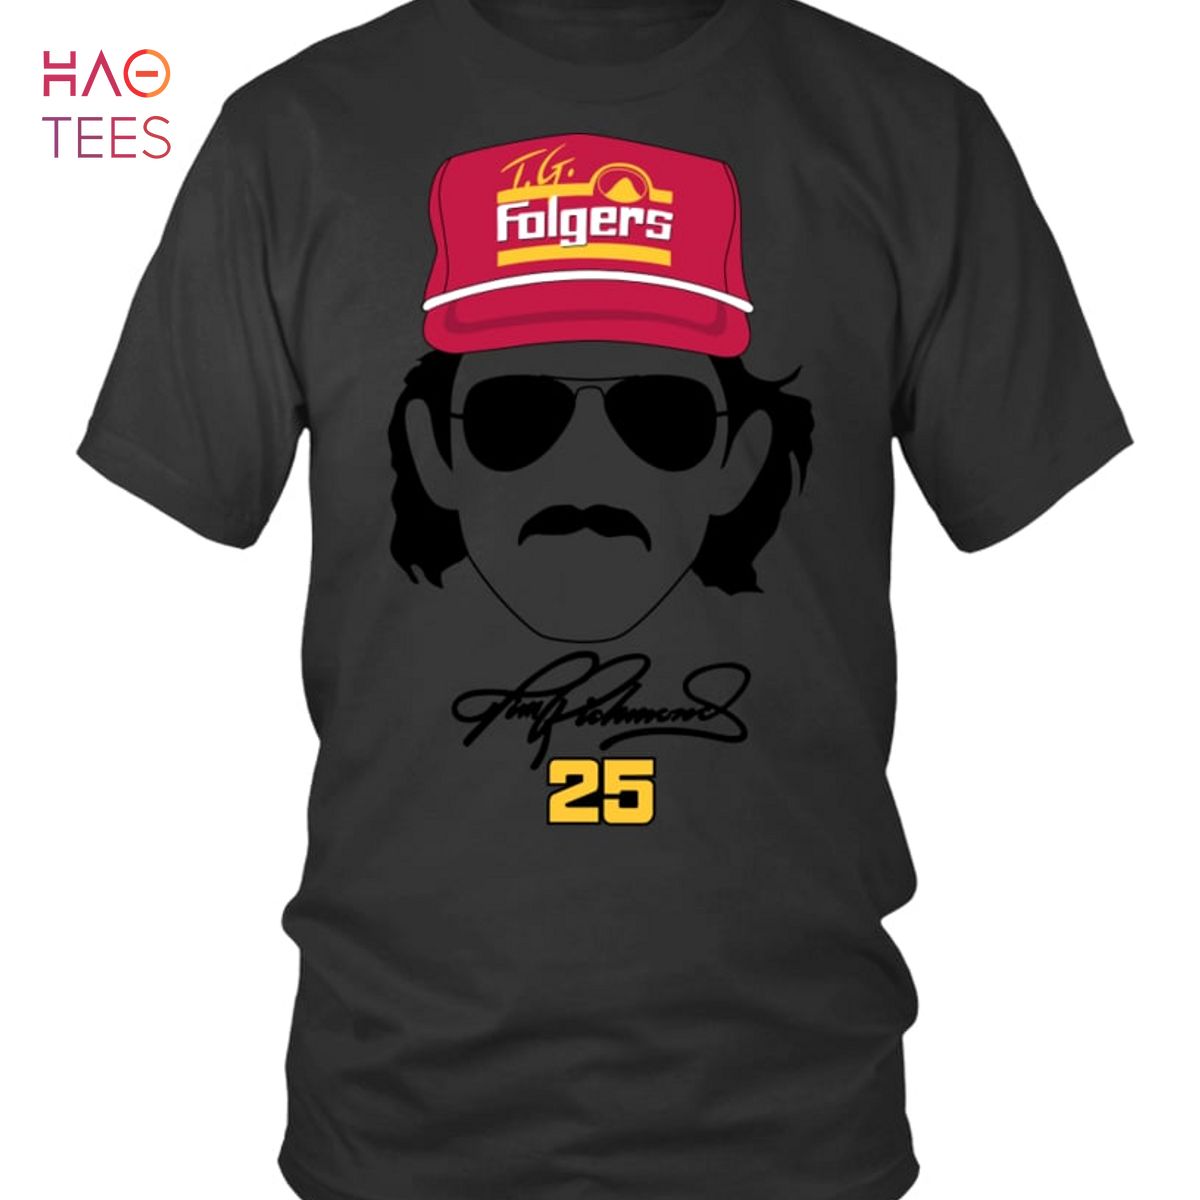 TG Folgers 25 Shirt Limited Edition